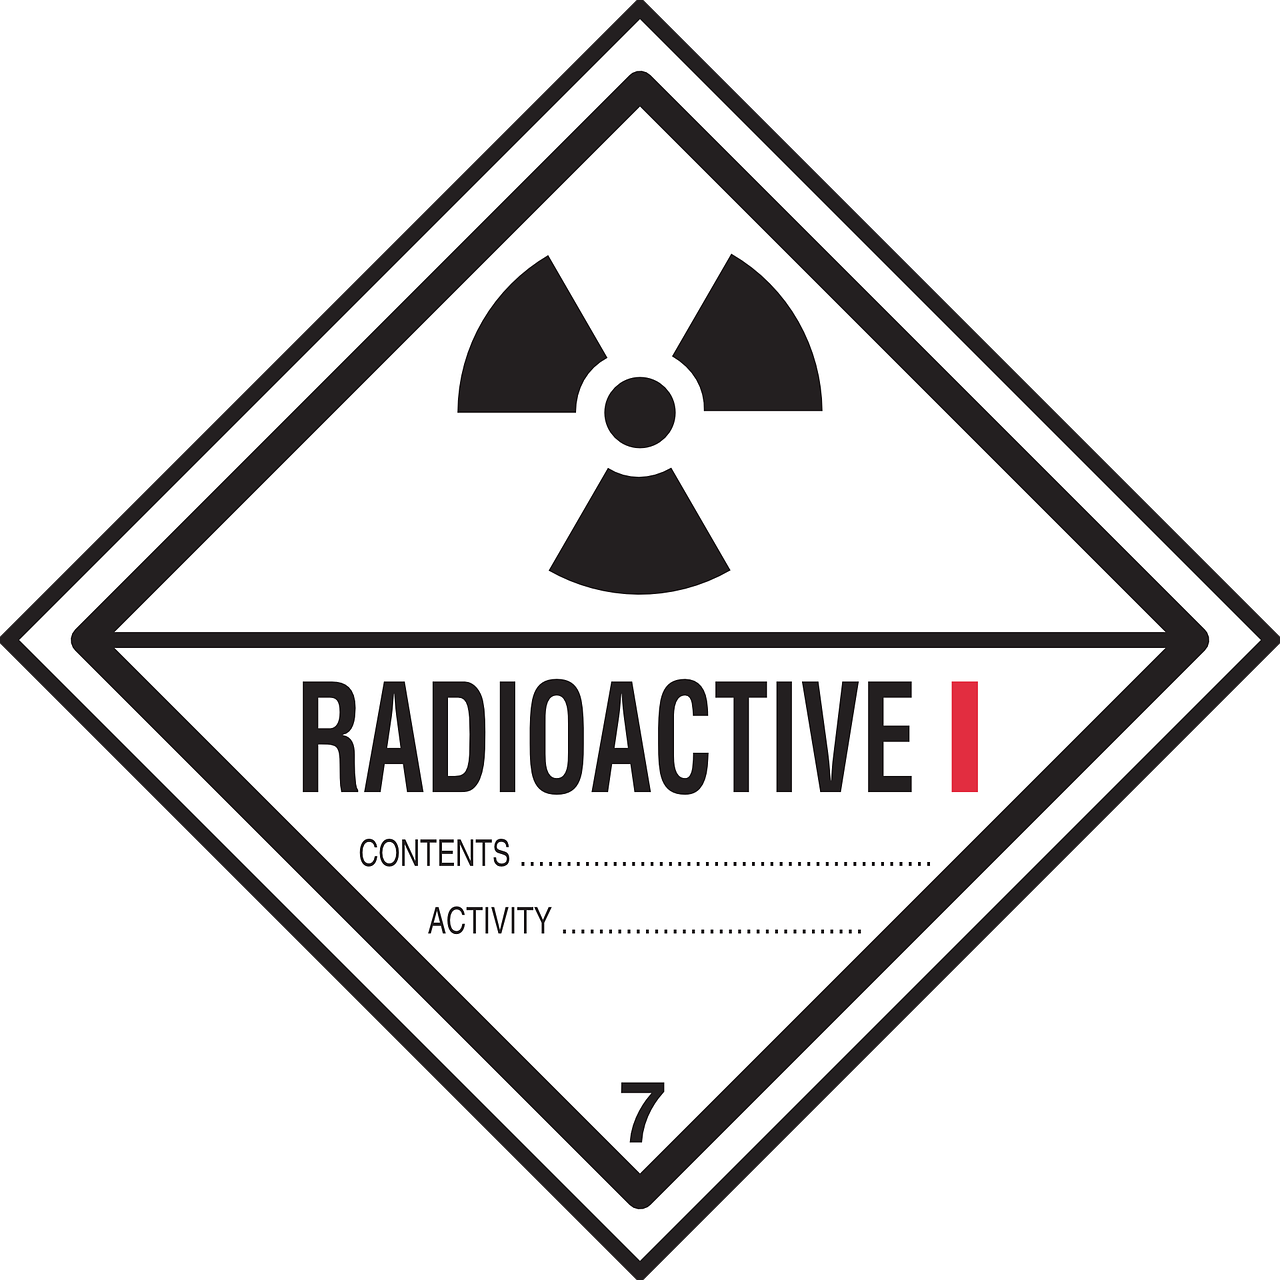 radioactive information warning free photo